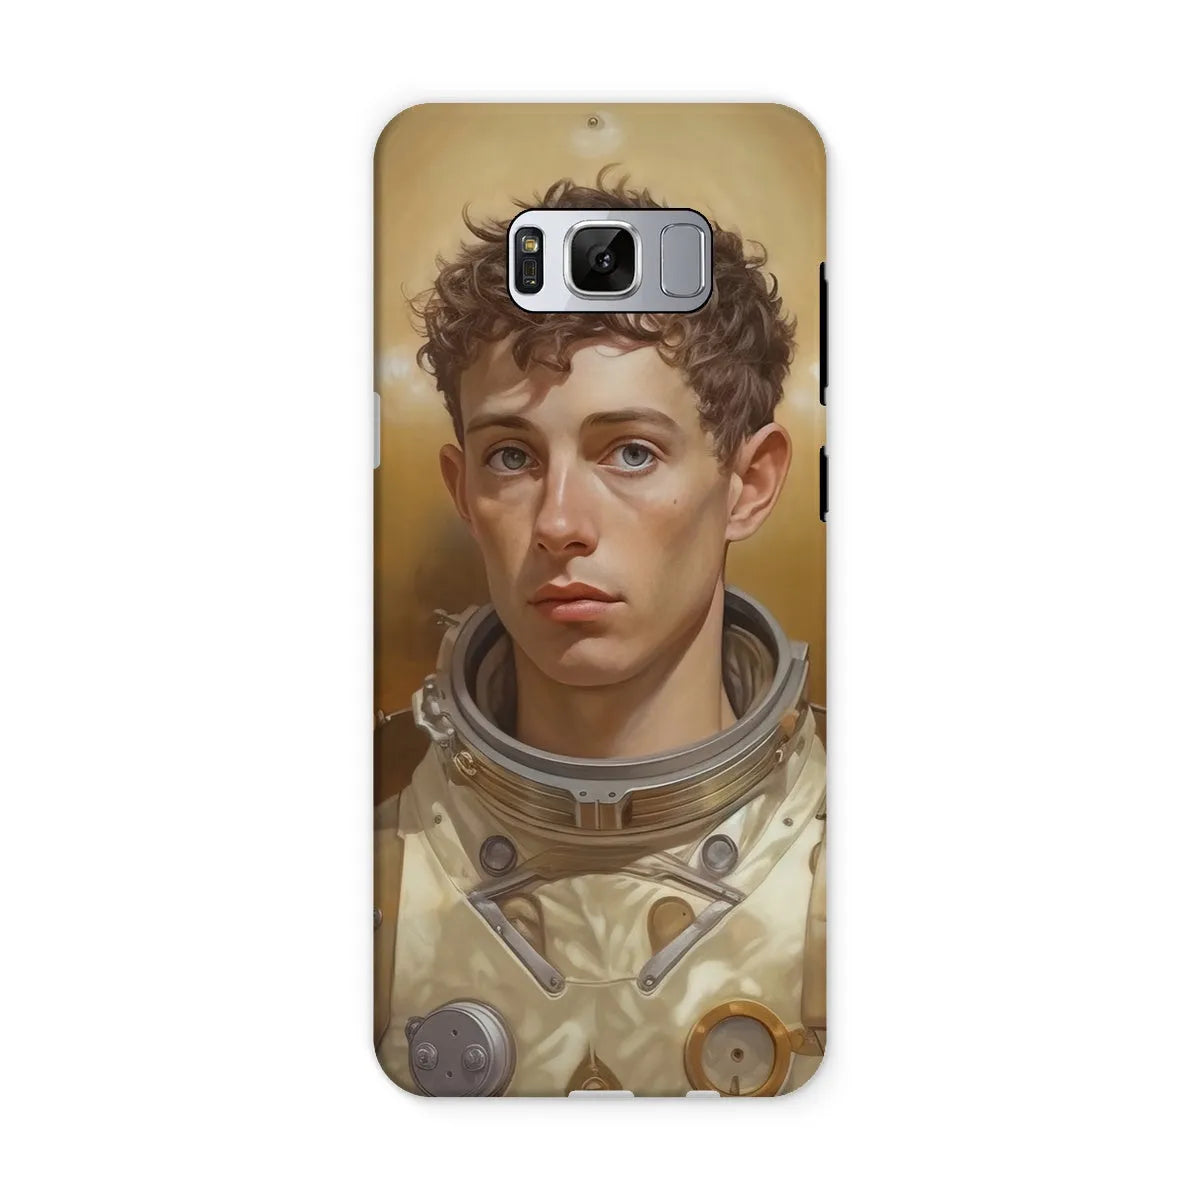 Noah The Gay Astronaut - Lgbtq Art Phone Case - Samsung Galaxy S8 / Matte - Mobile Phone Cases - Aesthetic Art